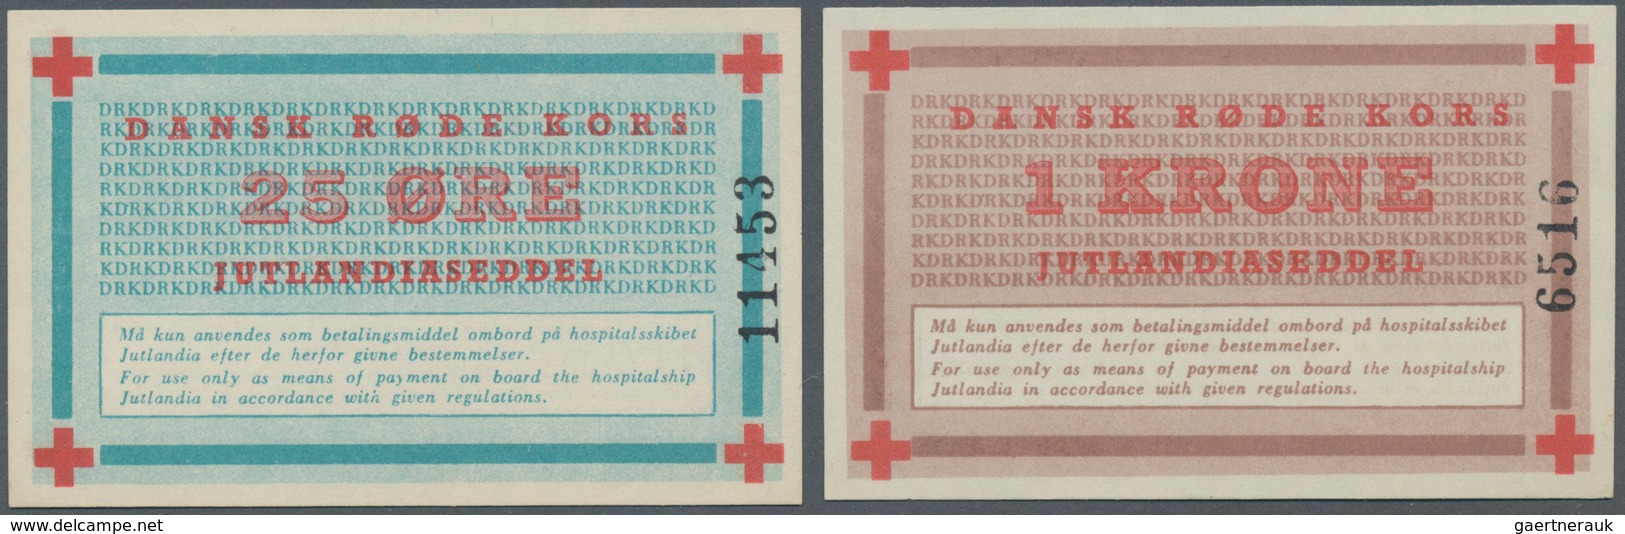 Denmark  / Dänemark: Jutland Notgeld Set With 3 Pcs. 25 Oere, 1 And 5 Kroner ND, P.NL In UNC Conditi - Denmark